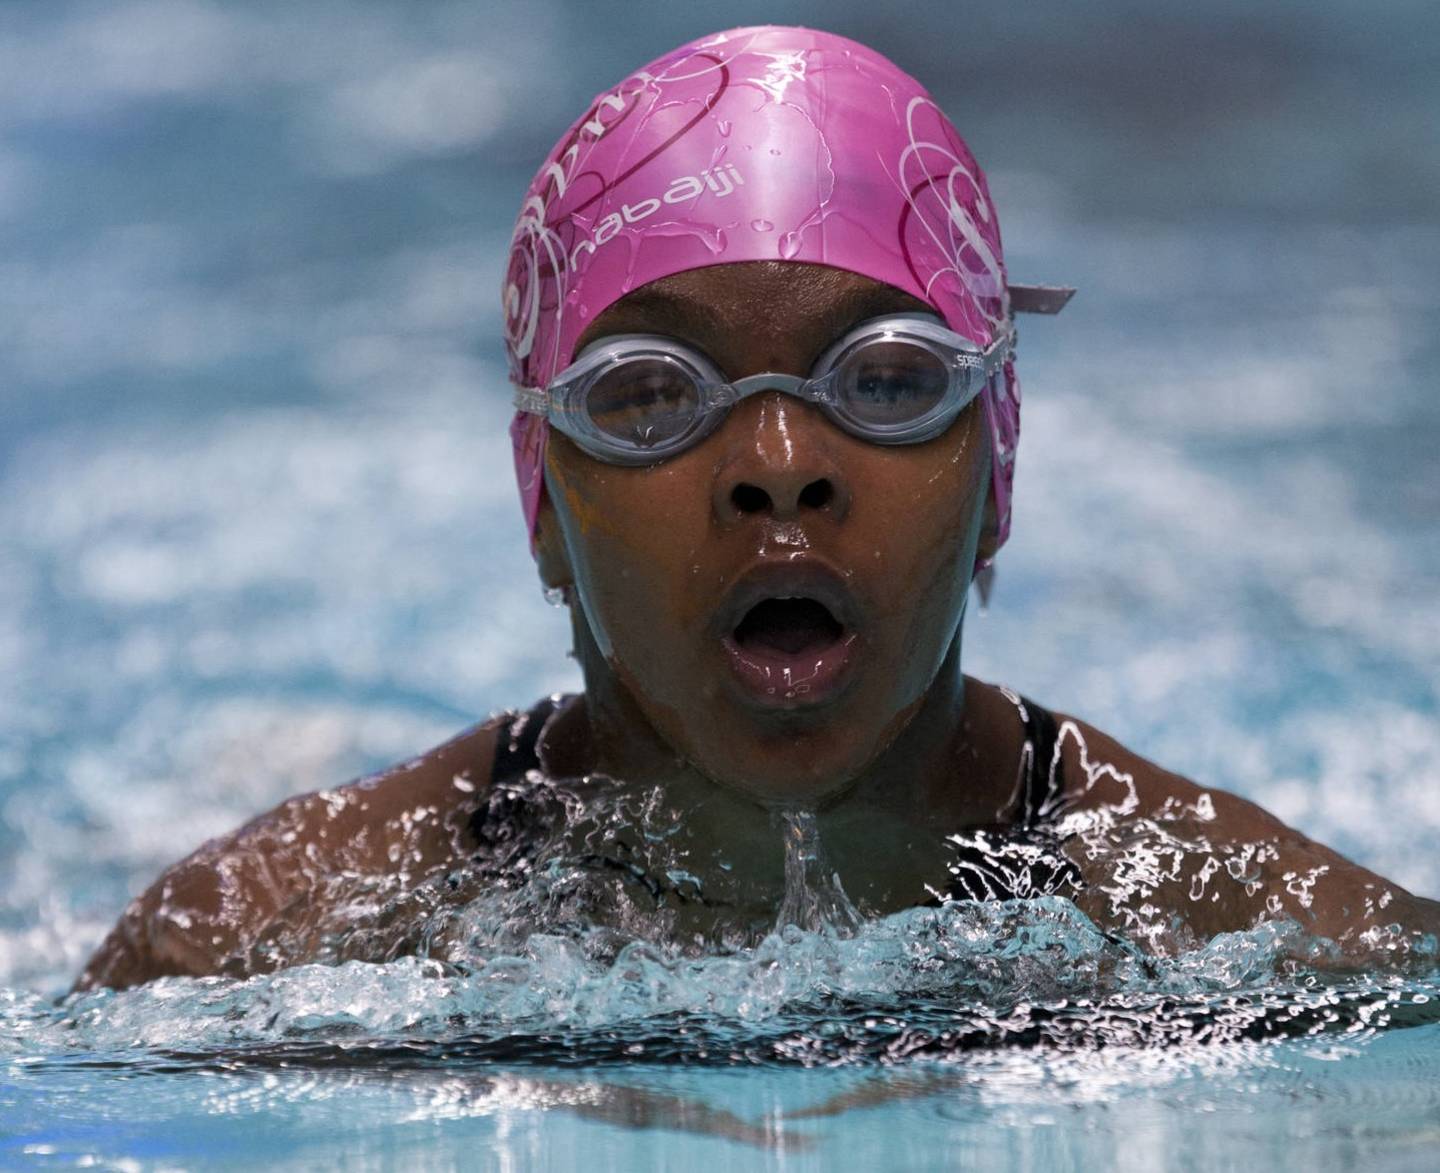 Junior swimmer swimming in race